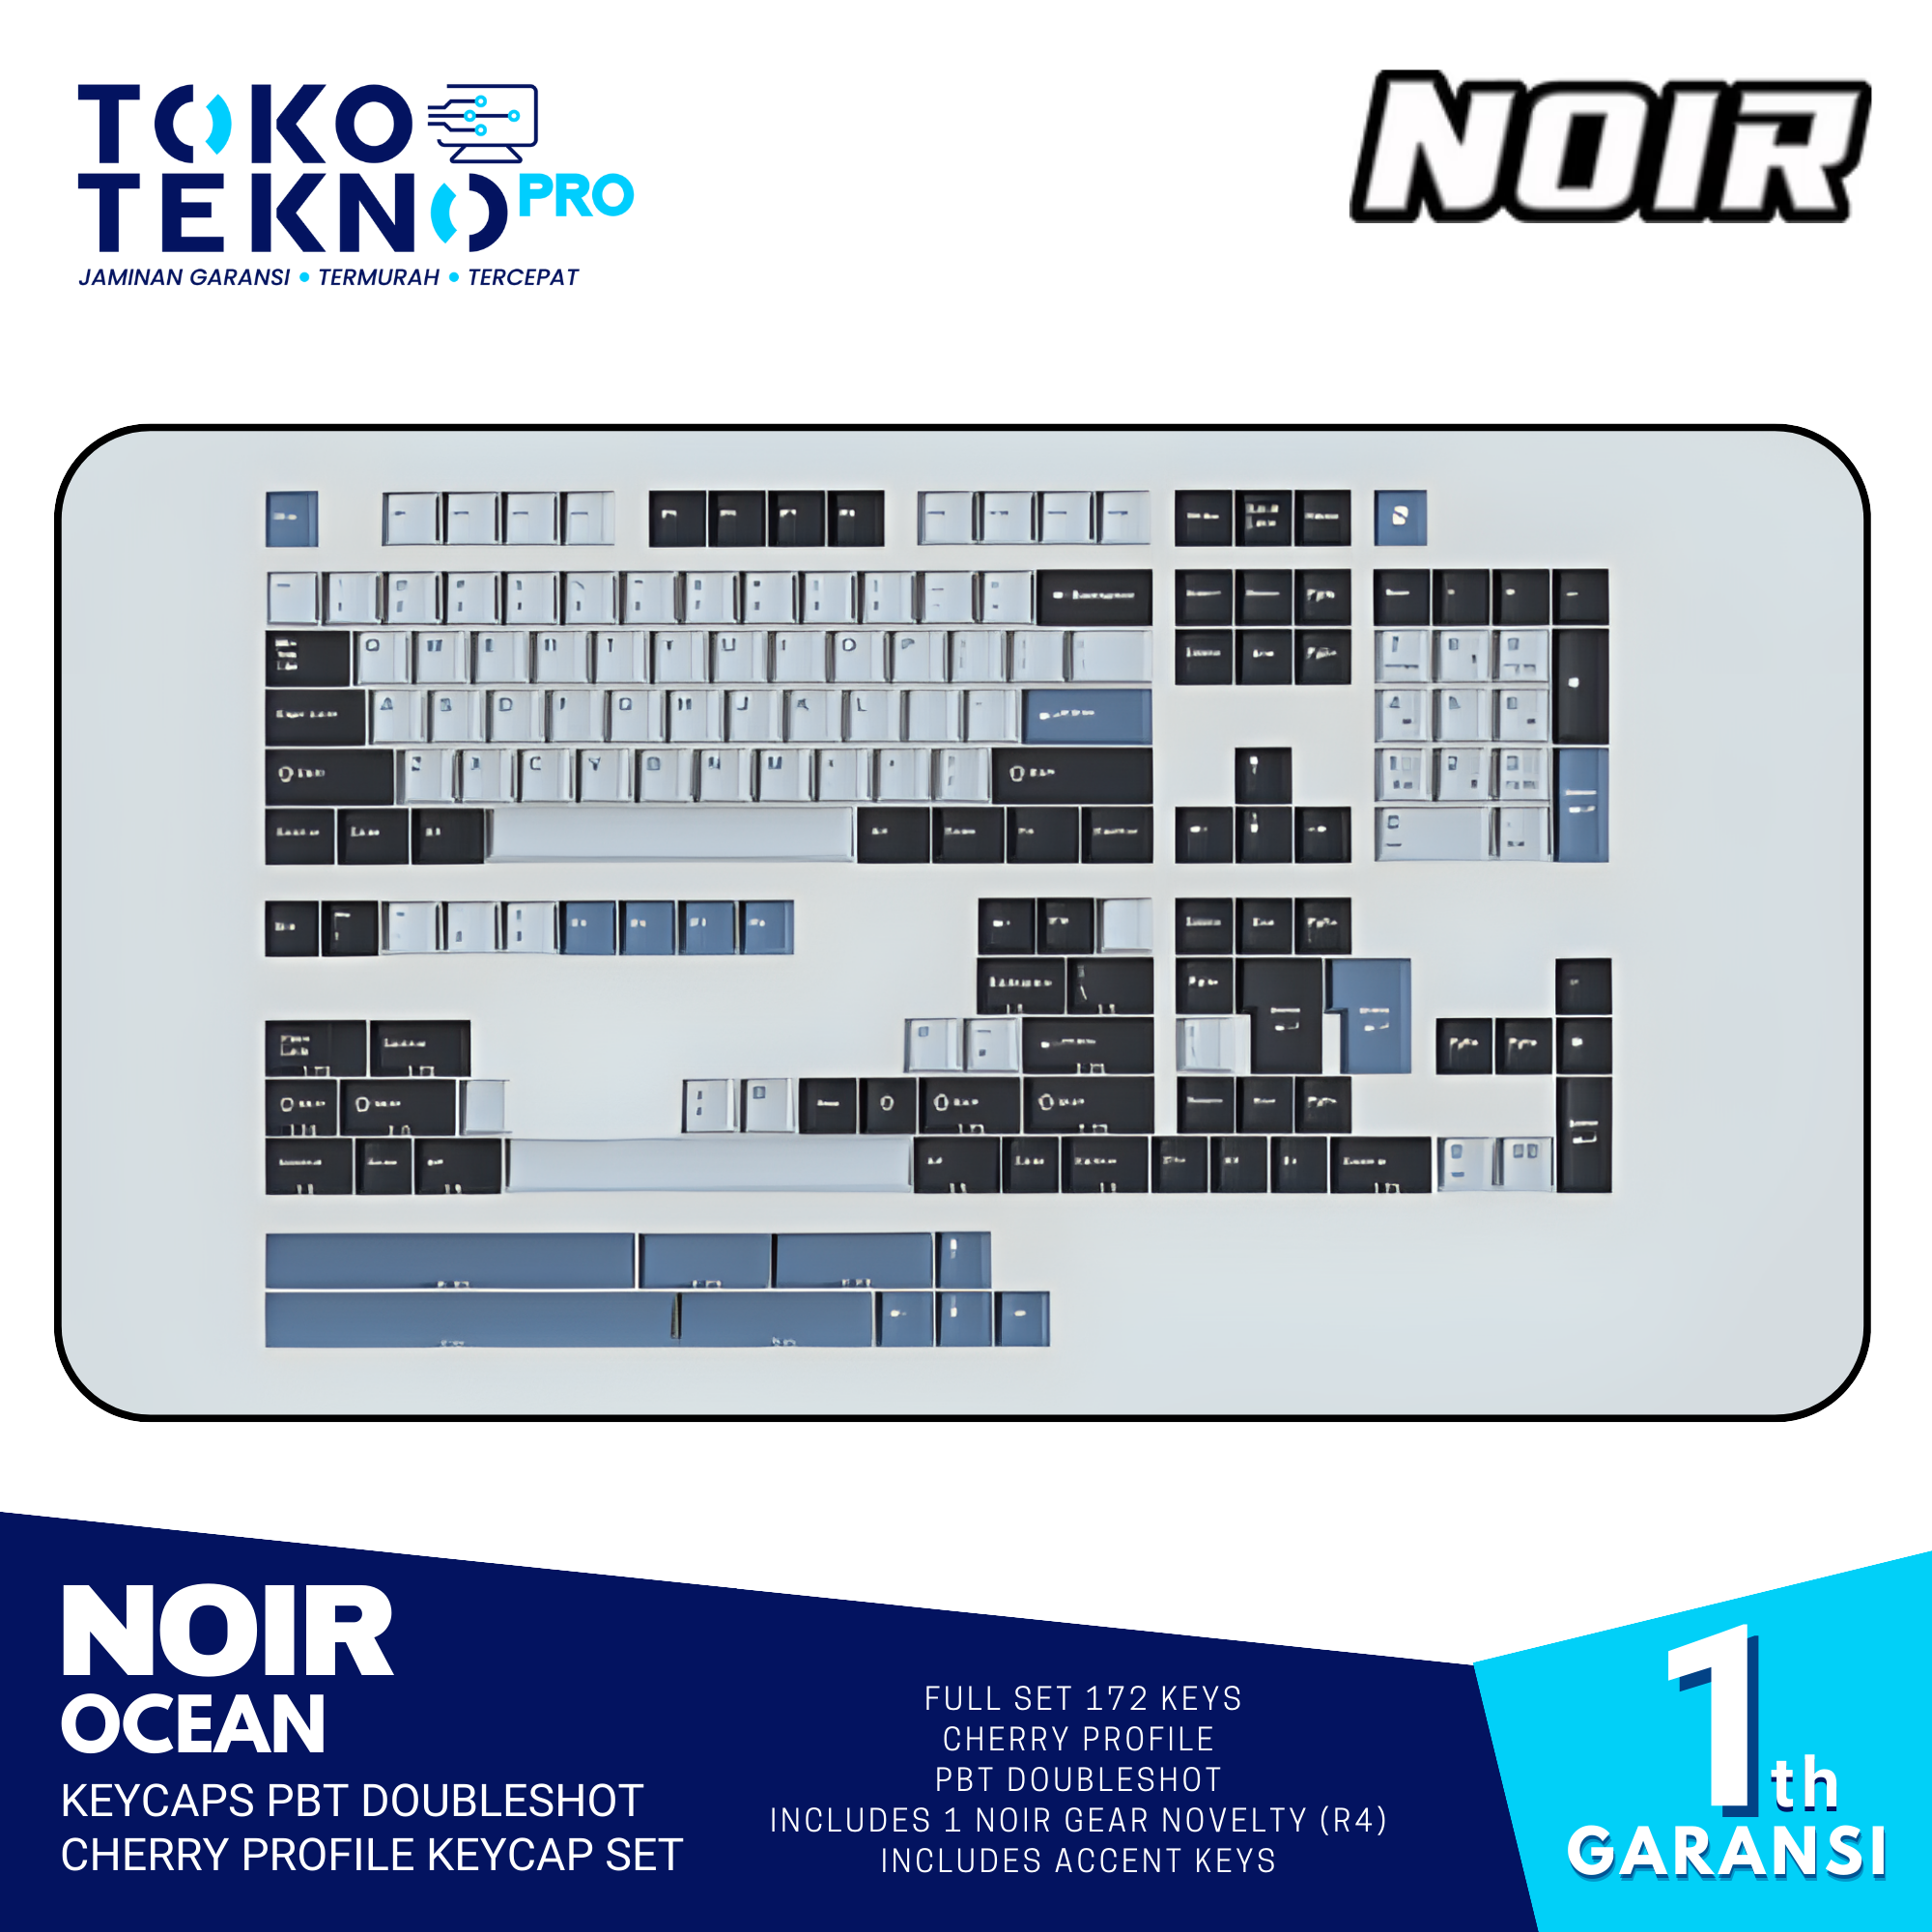 Noir Ocean Keycaps PBT Doubleshot Cherry Profile Keycap Set